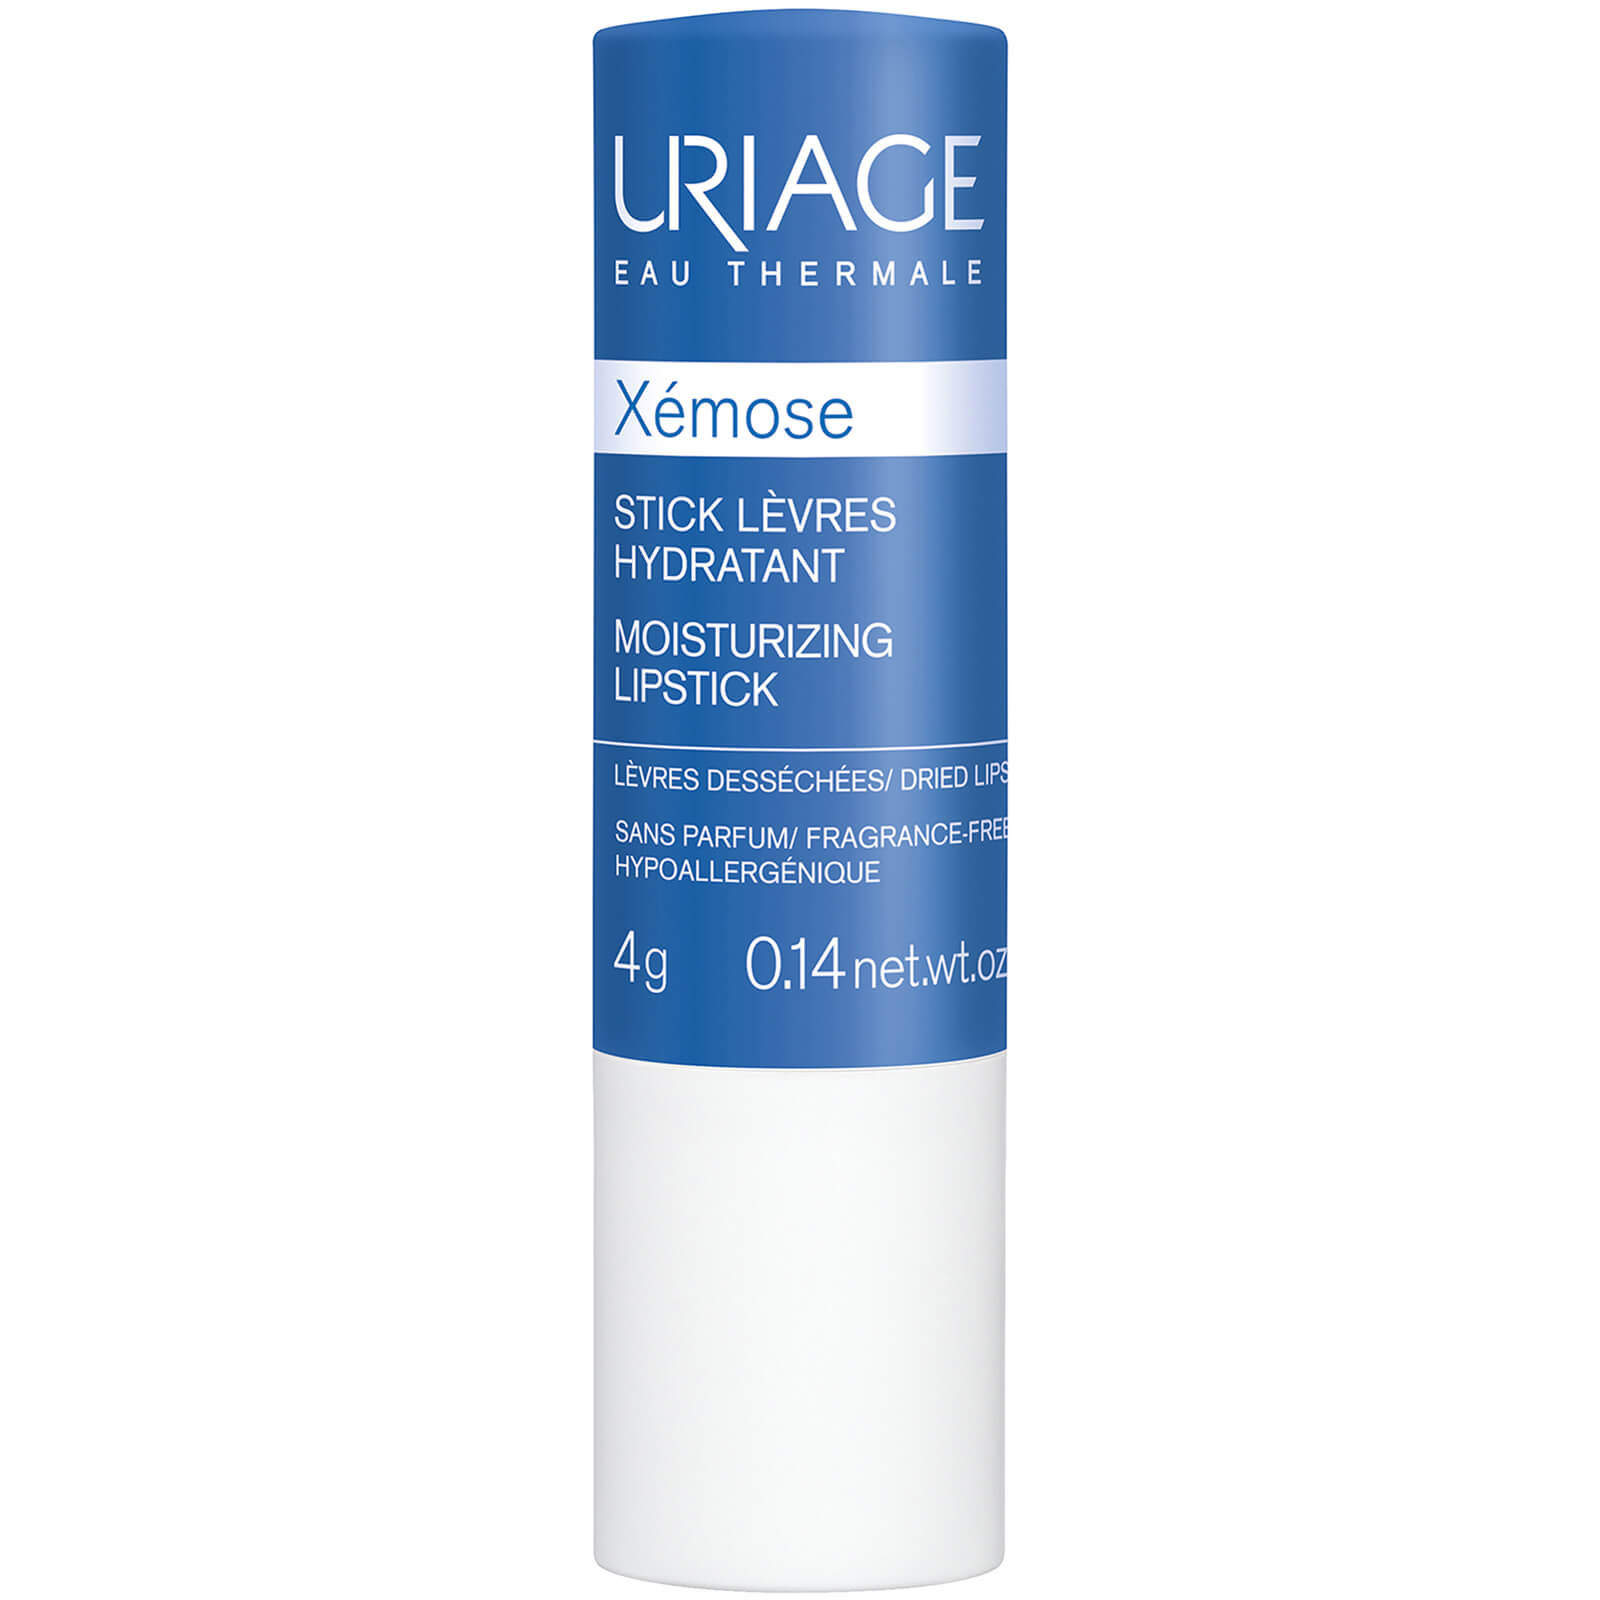 Uriage Xemose Emollient Lip Treatment 4g